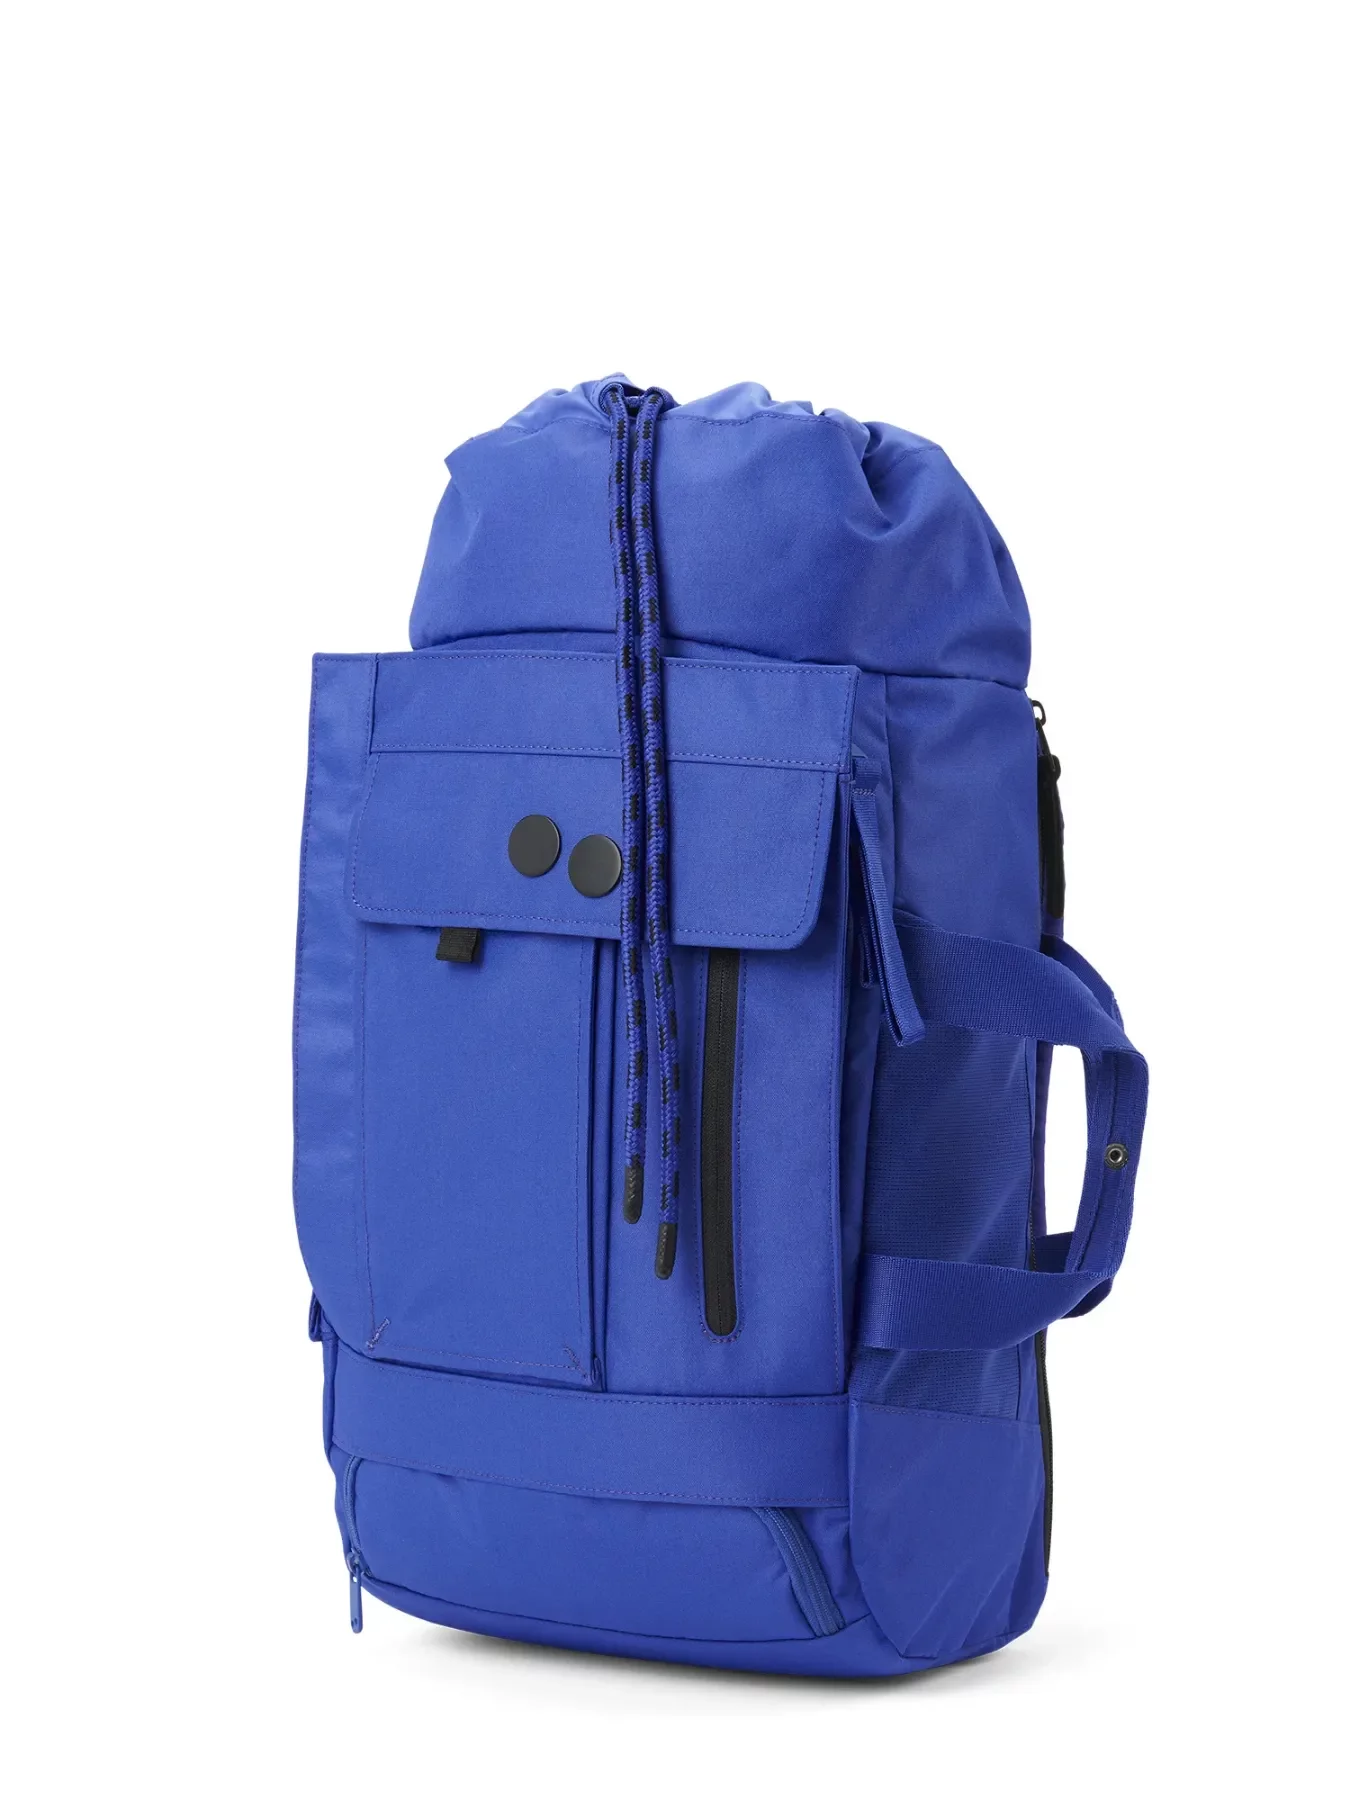 pinqponq Backpack BLOK medium Construct - Poppy Blue 3